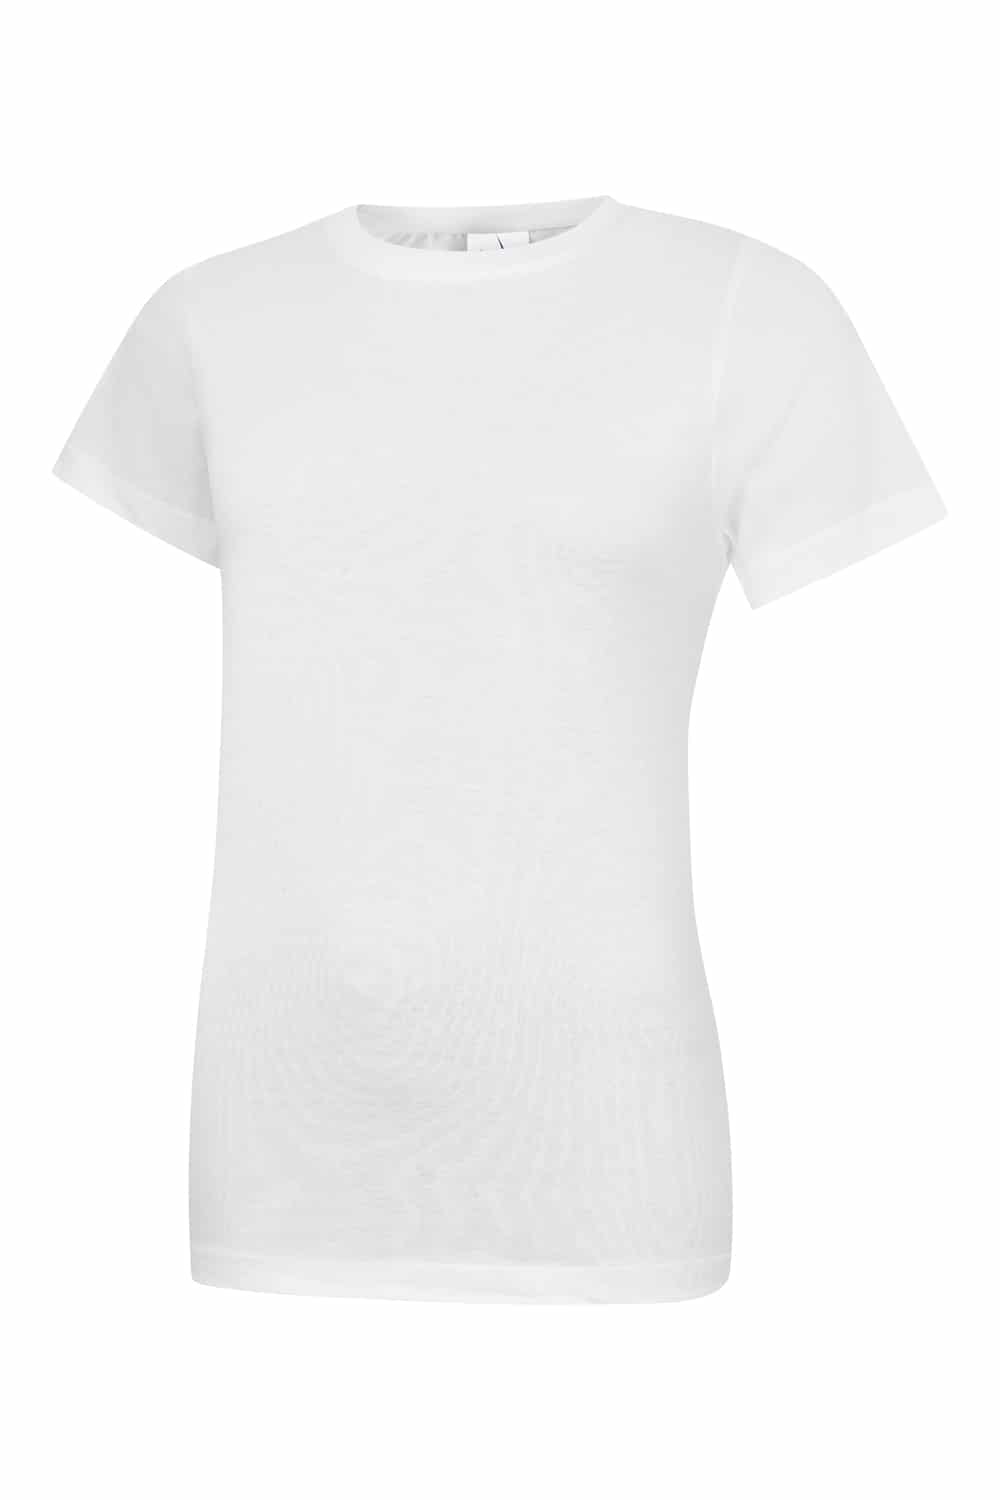 Uneek Classic Crew Neck T-Shirt – Ladies Fit